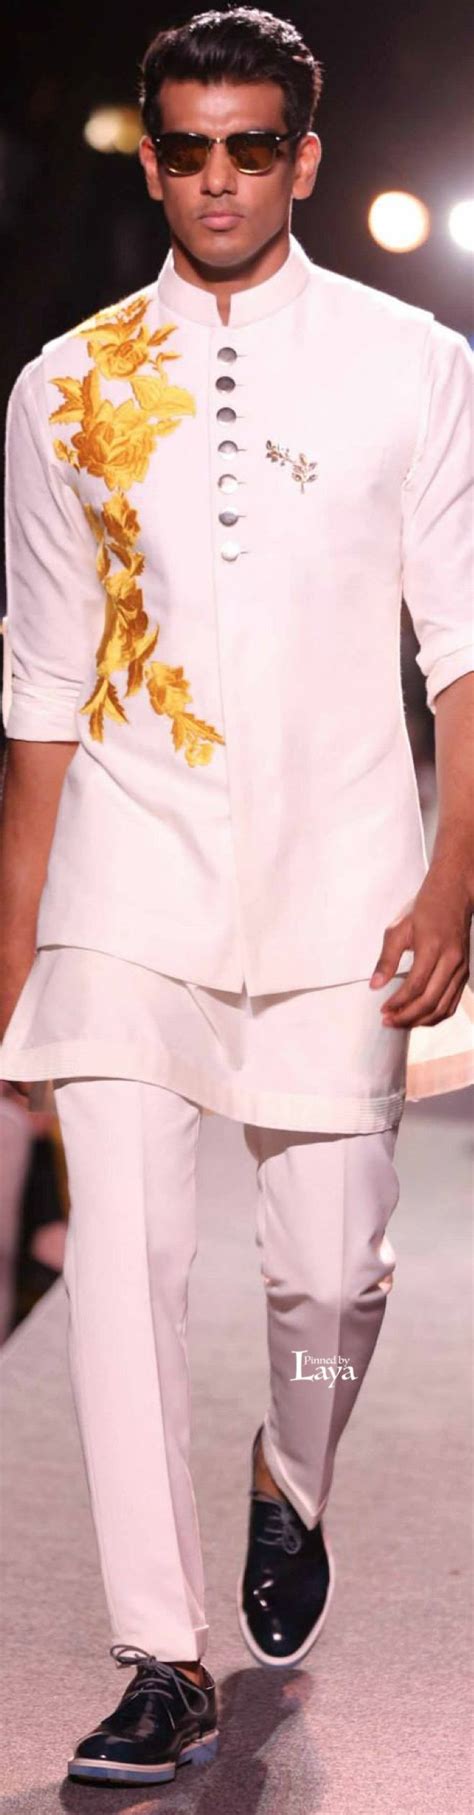 Traditional Indian Menswear Lfw Google Search Indian Men Fashion